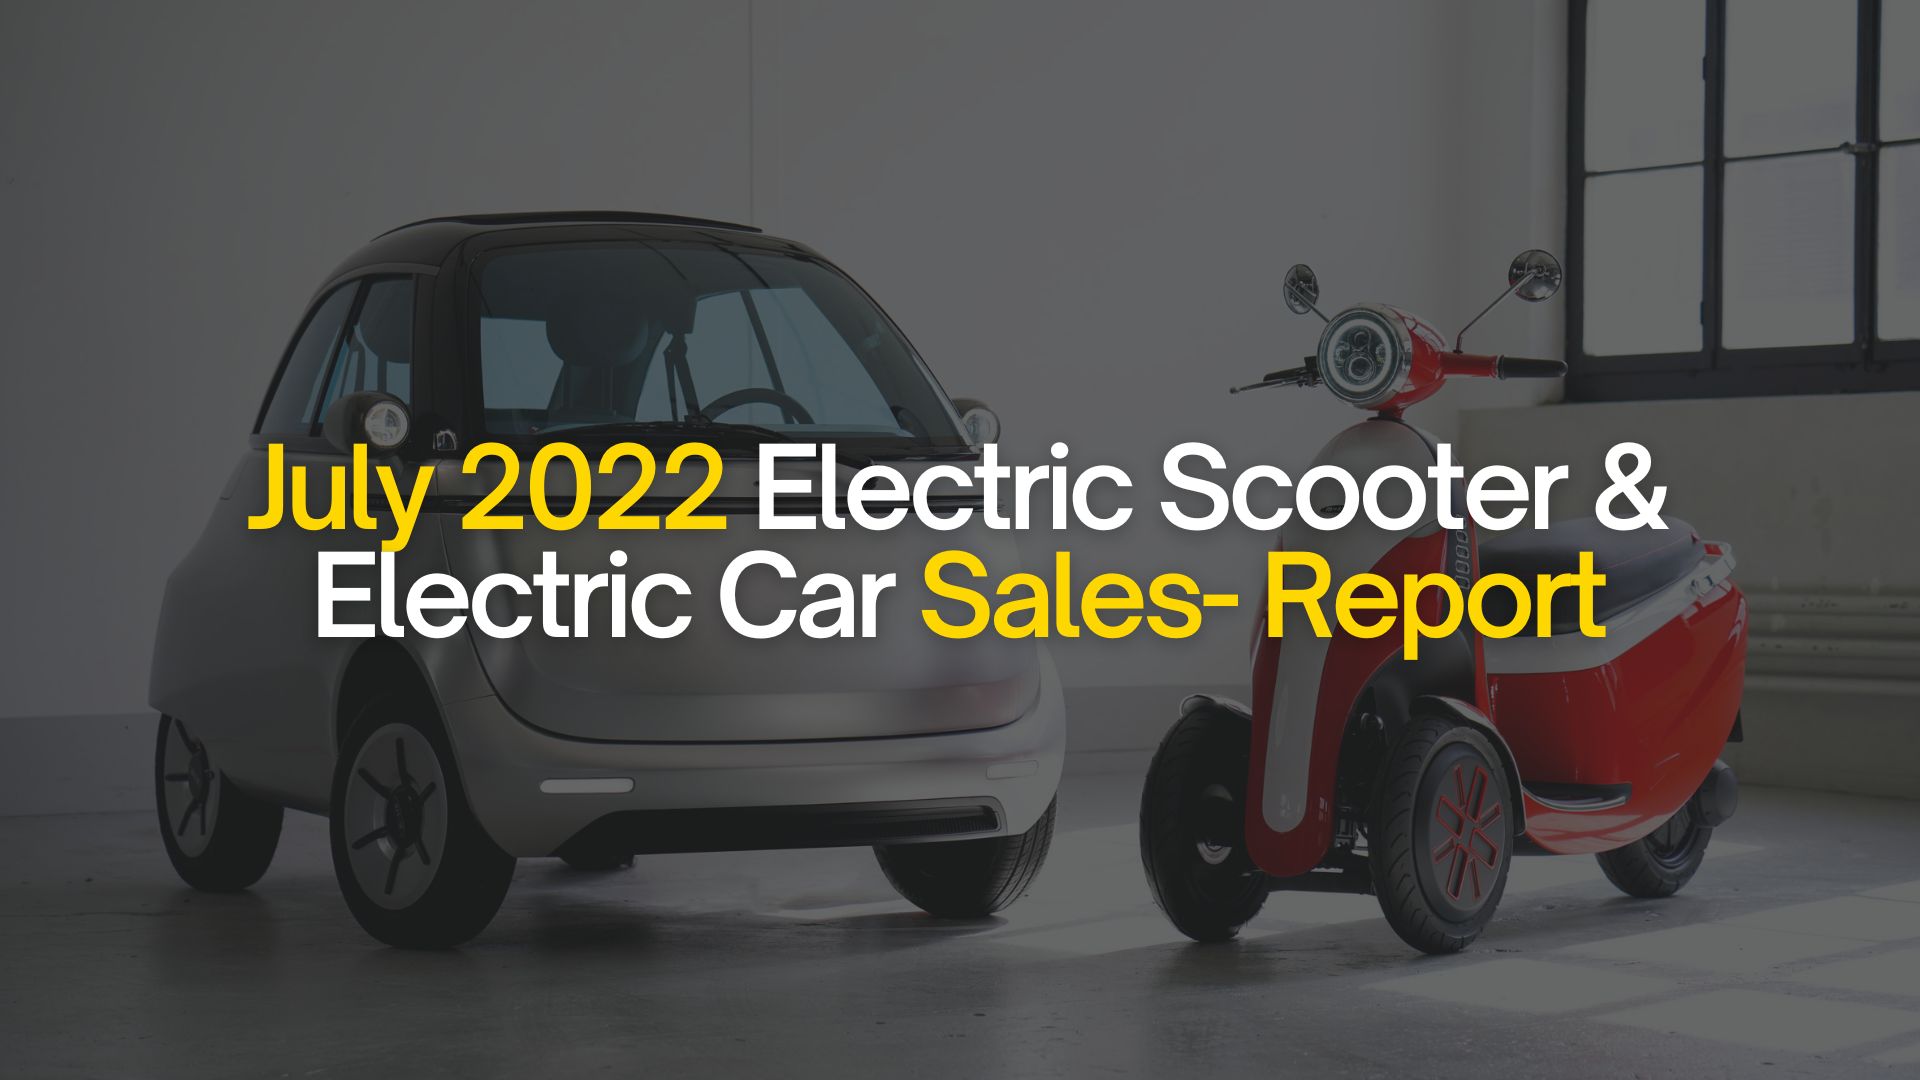 https://carandbike24.com/july-2022-electric-scooter-electric-car-sales-report/